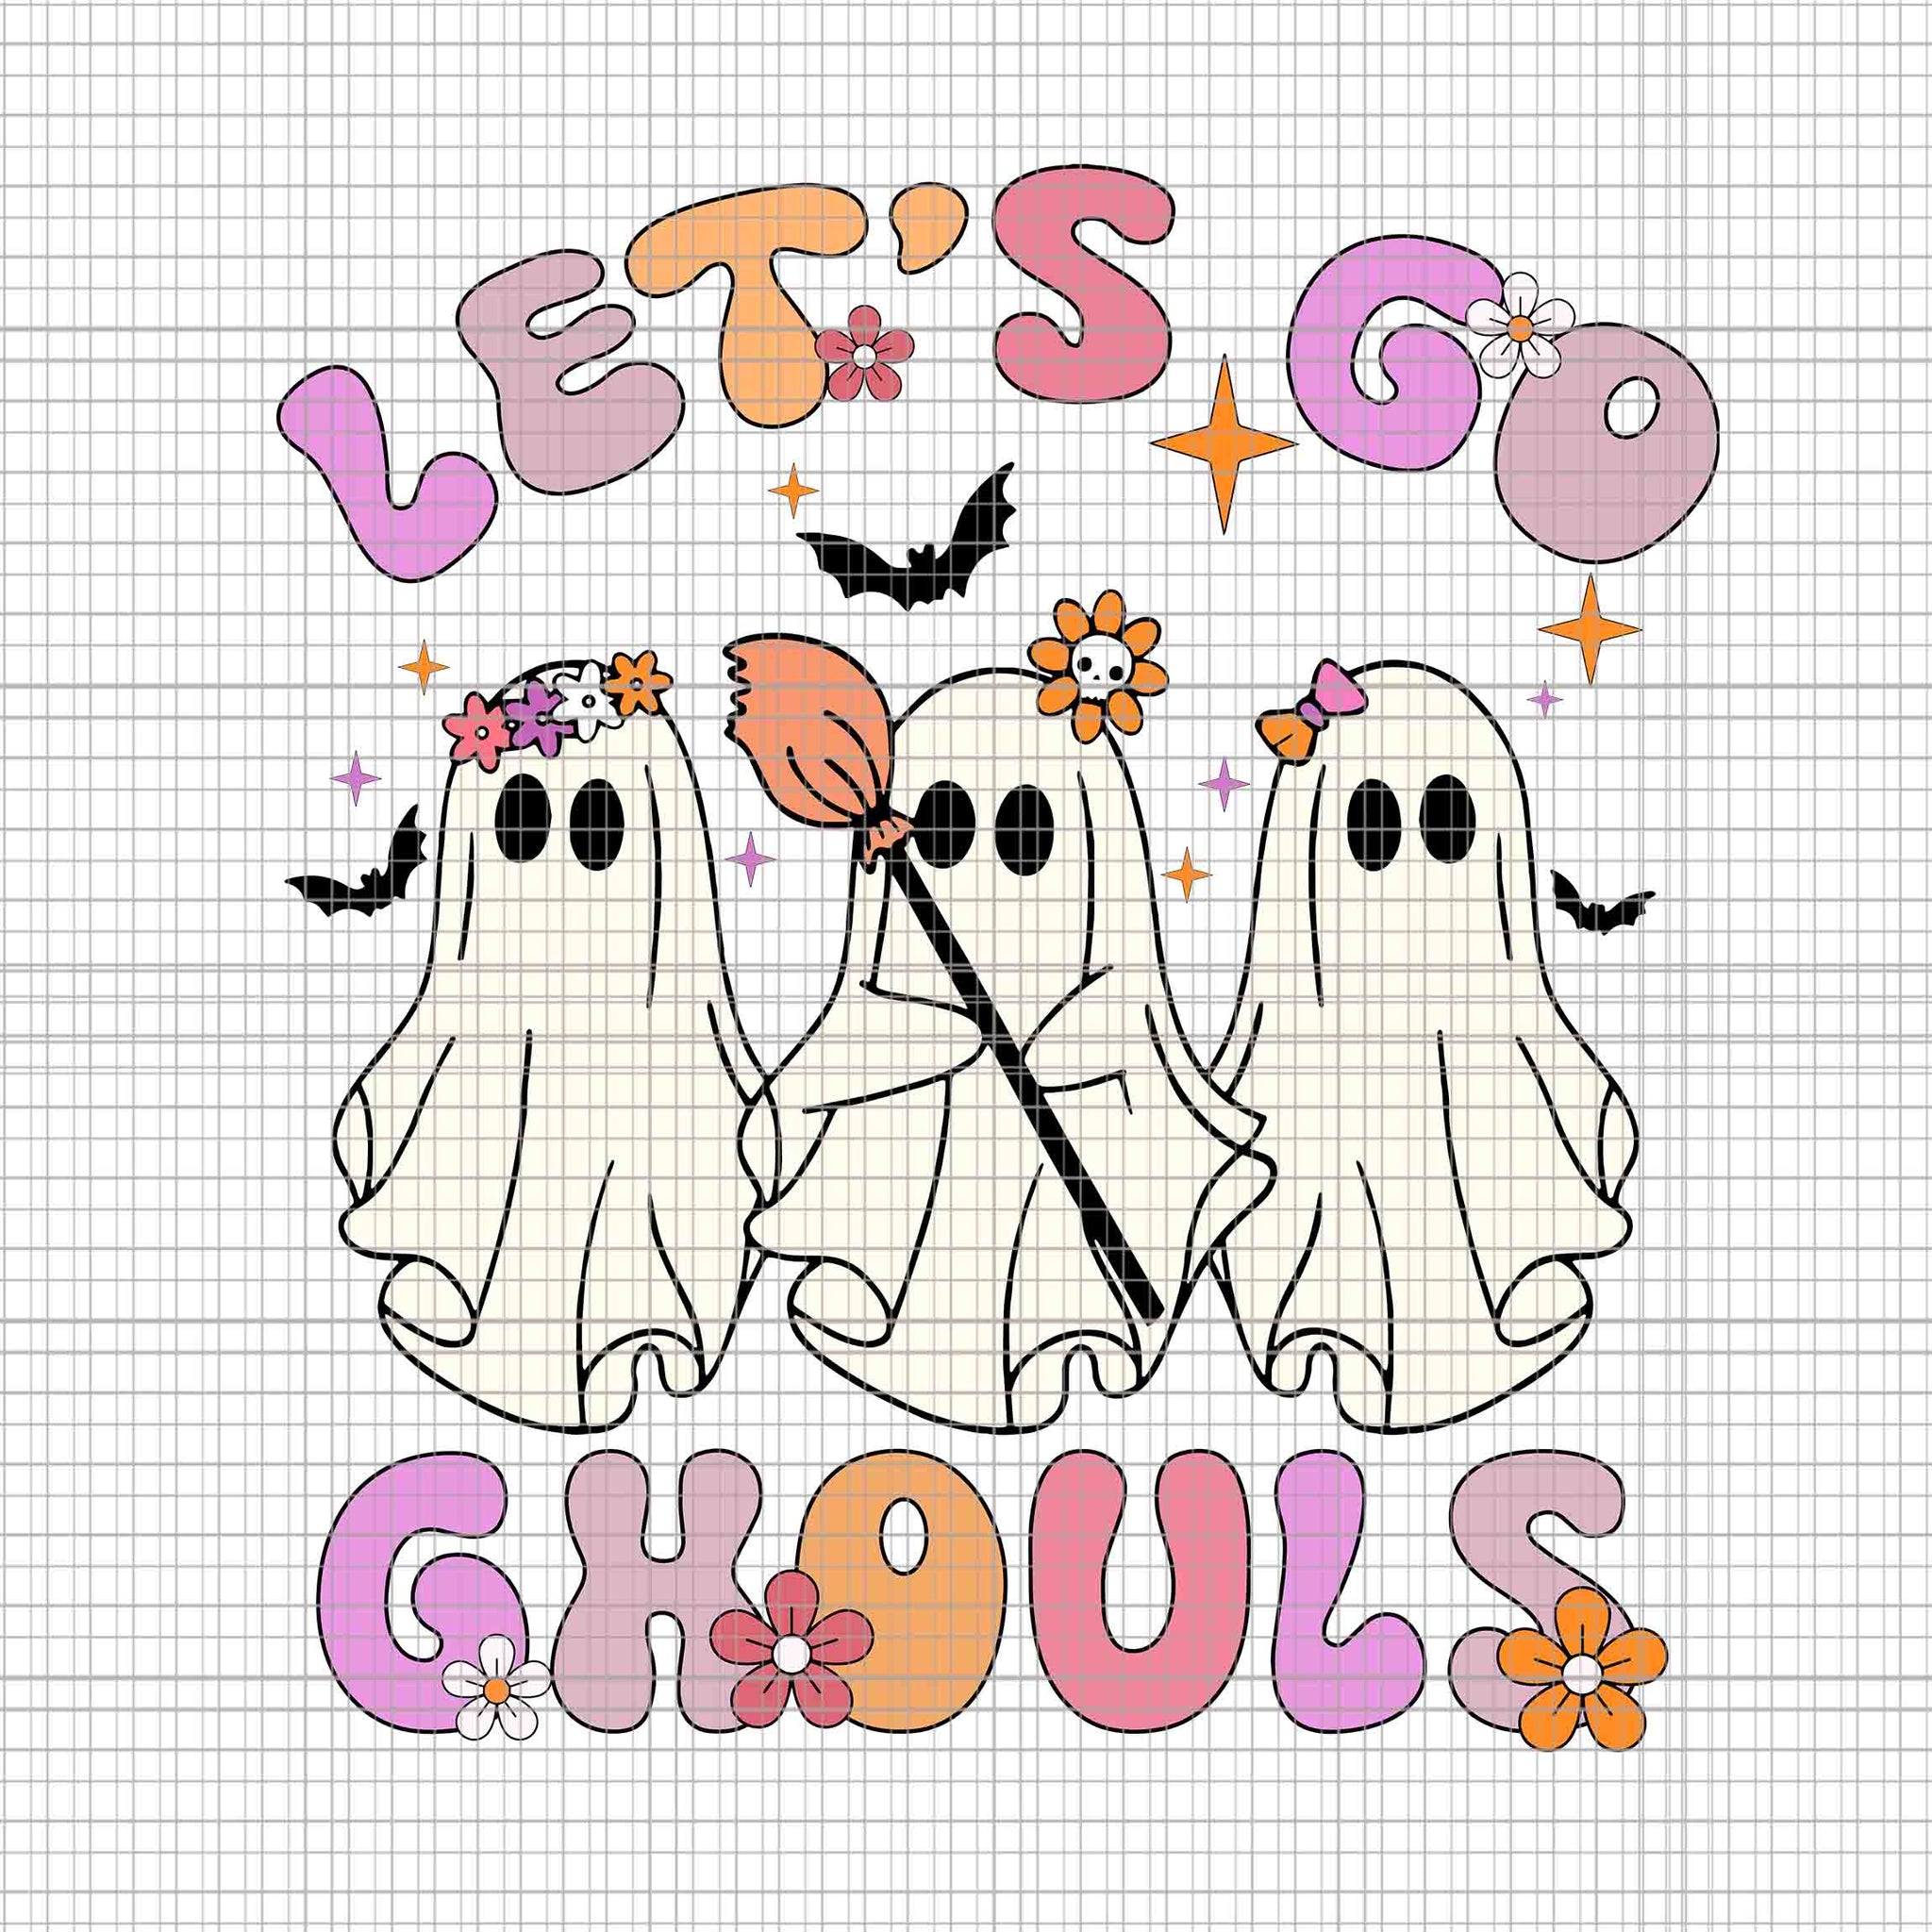 Let's Go Ghouls Halloween Ghost Retro Groovy Svg, Let's Go Ghouls Halloween Svg, Halloween Ghost Svg, Halloween Svg